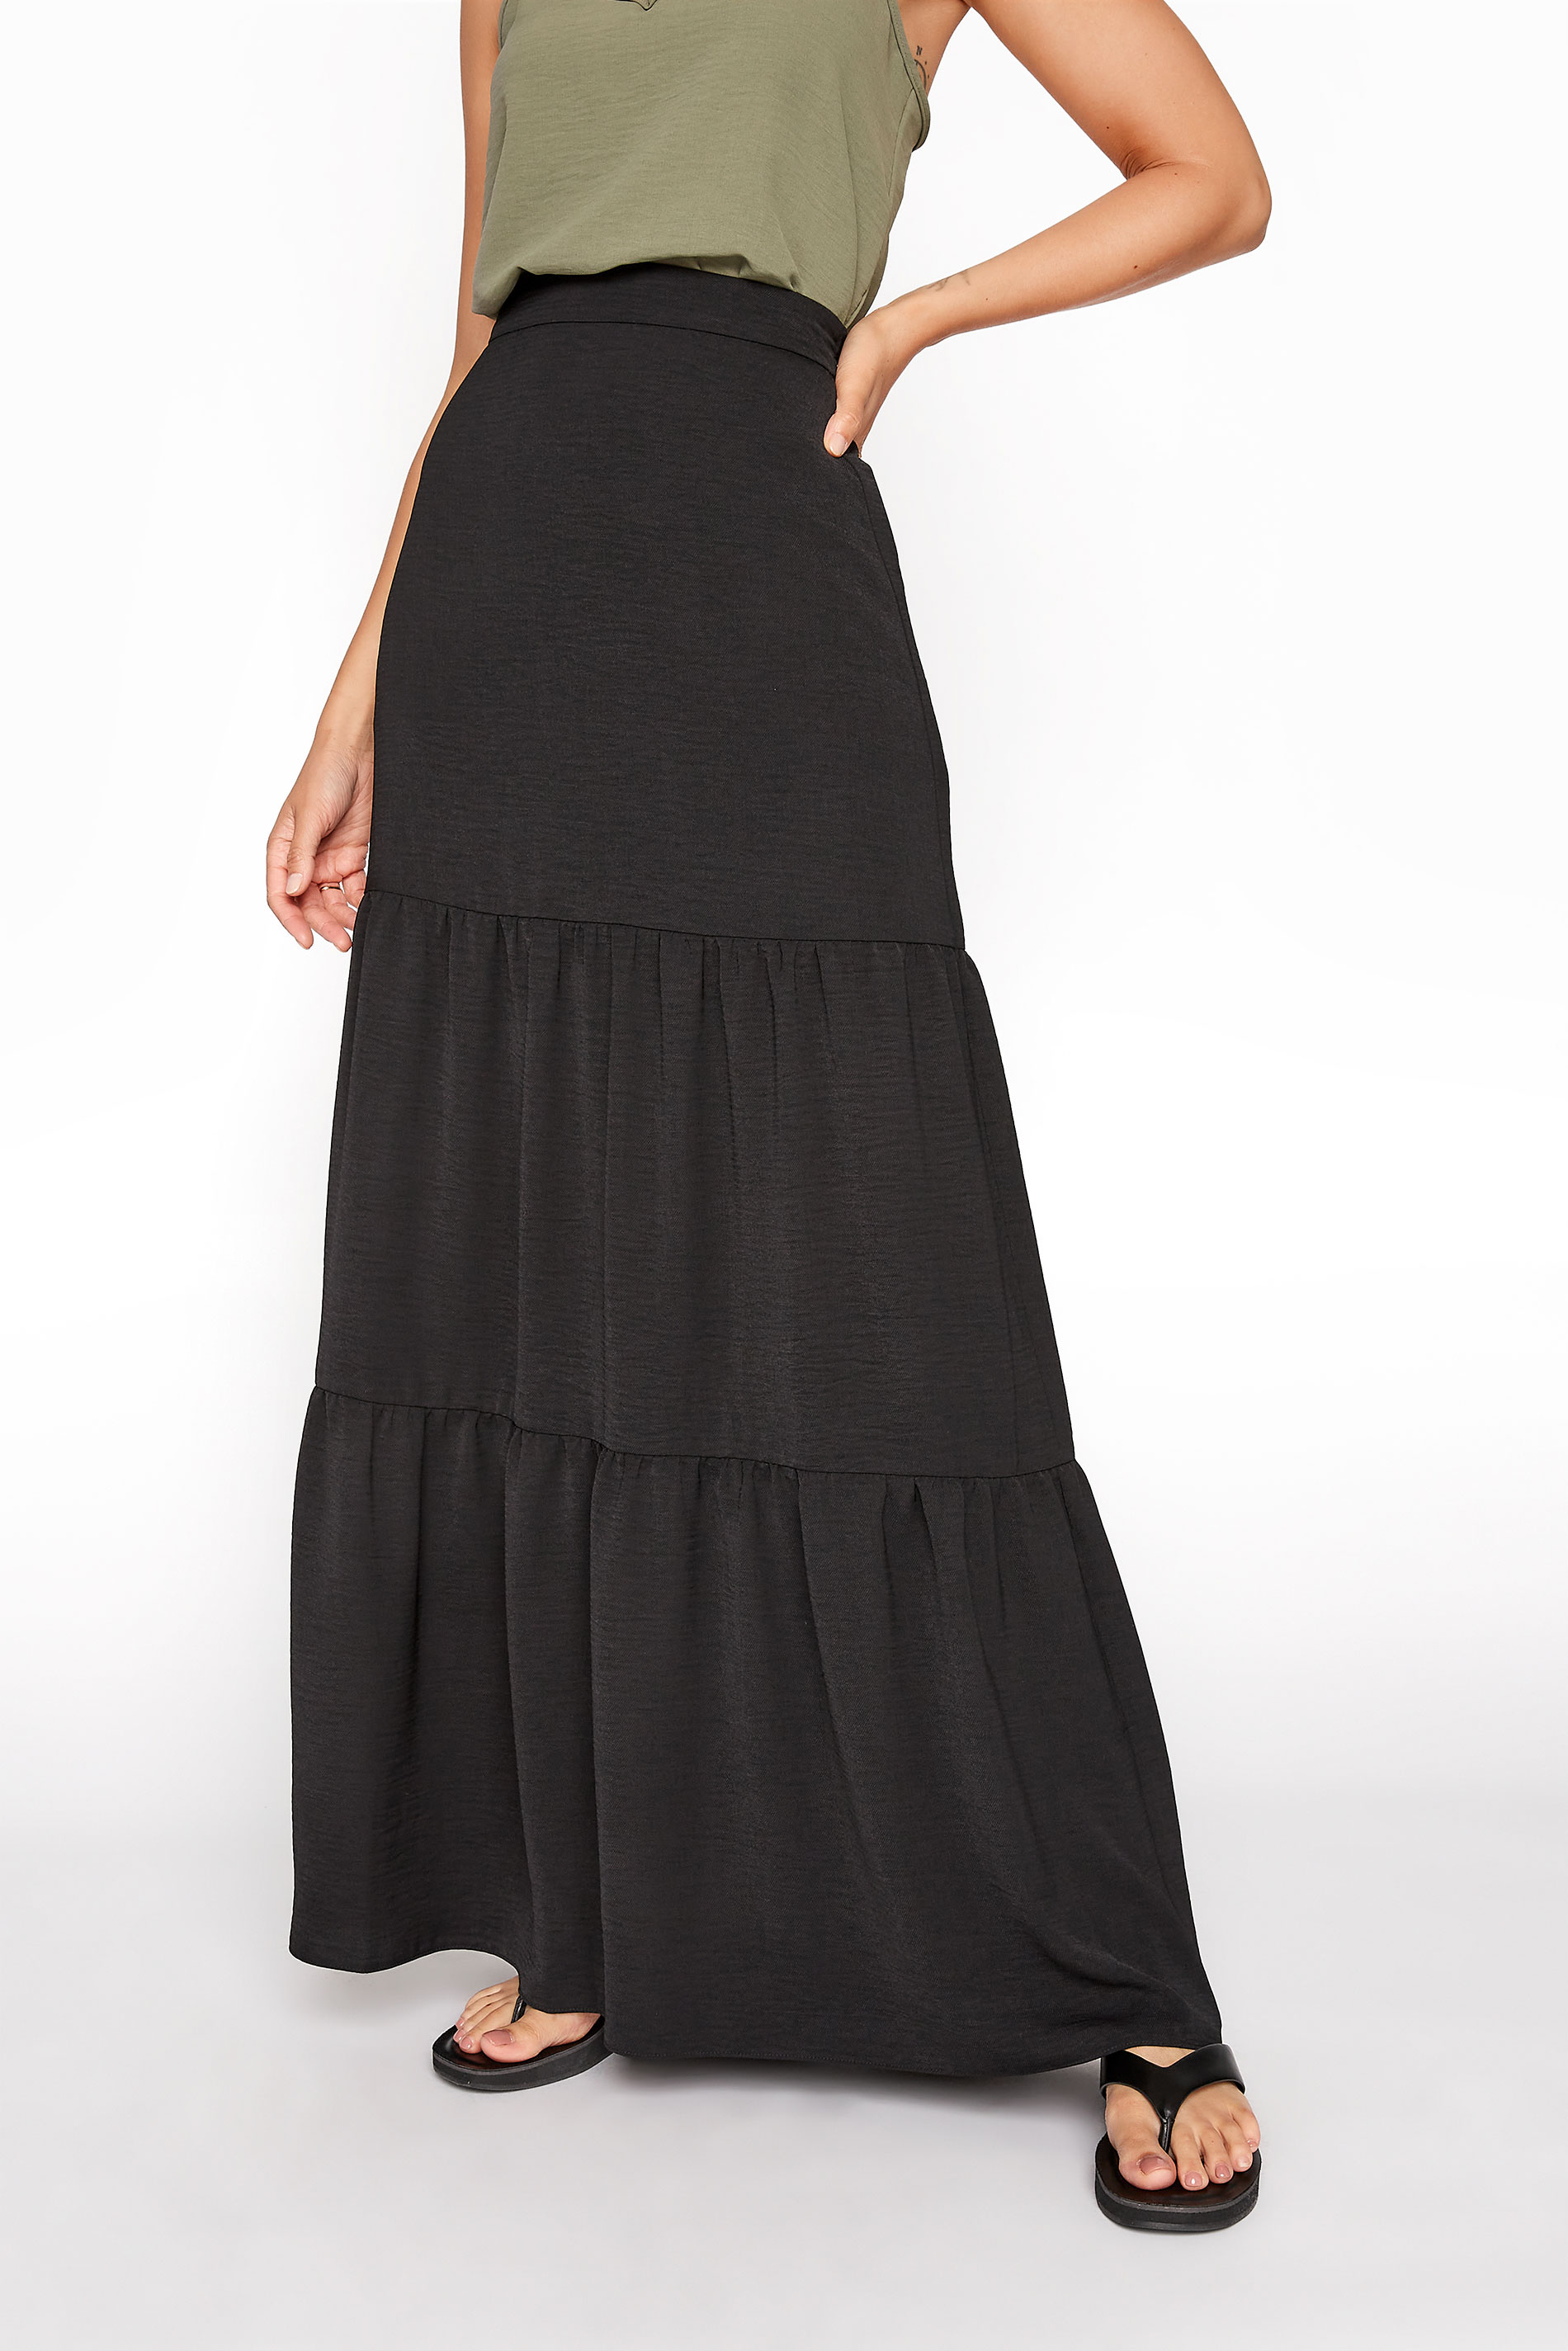 LTS Black Tiered Maxi Skirt | Long Tall Sally